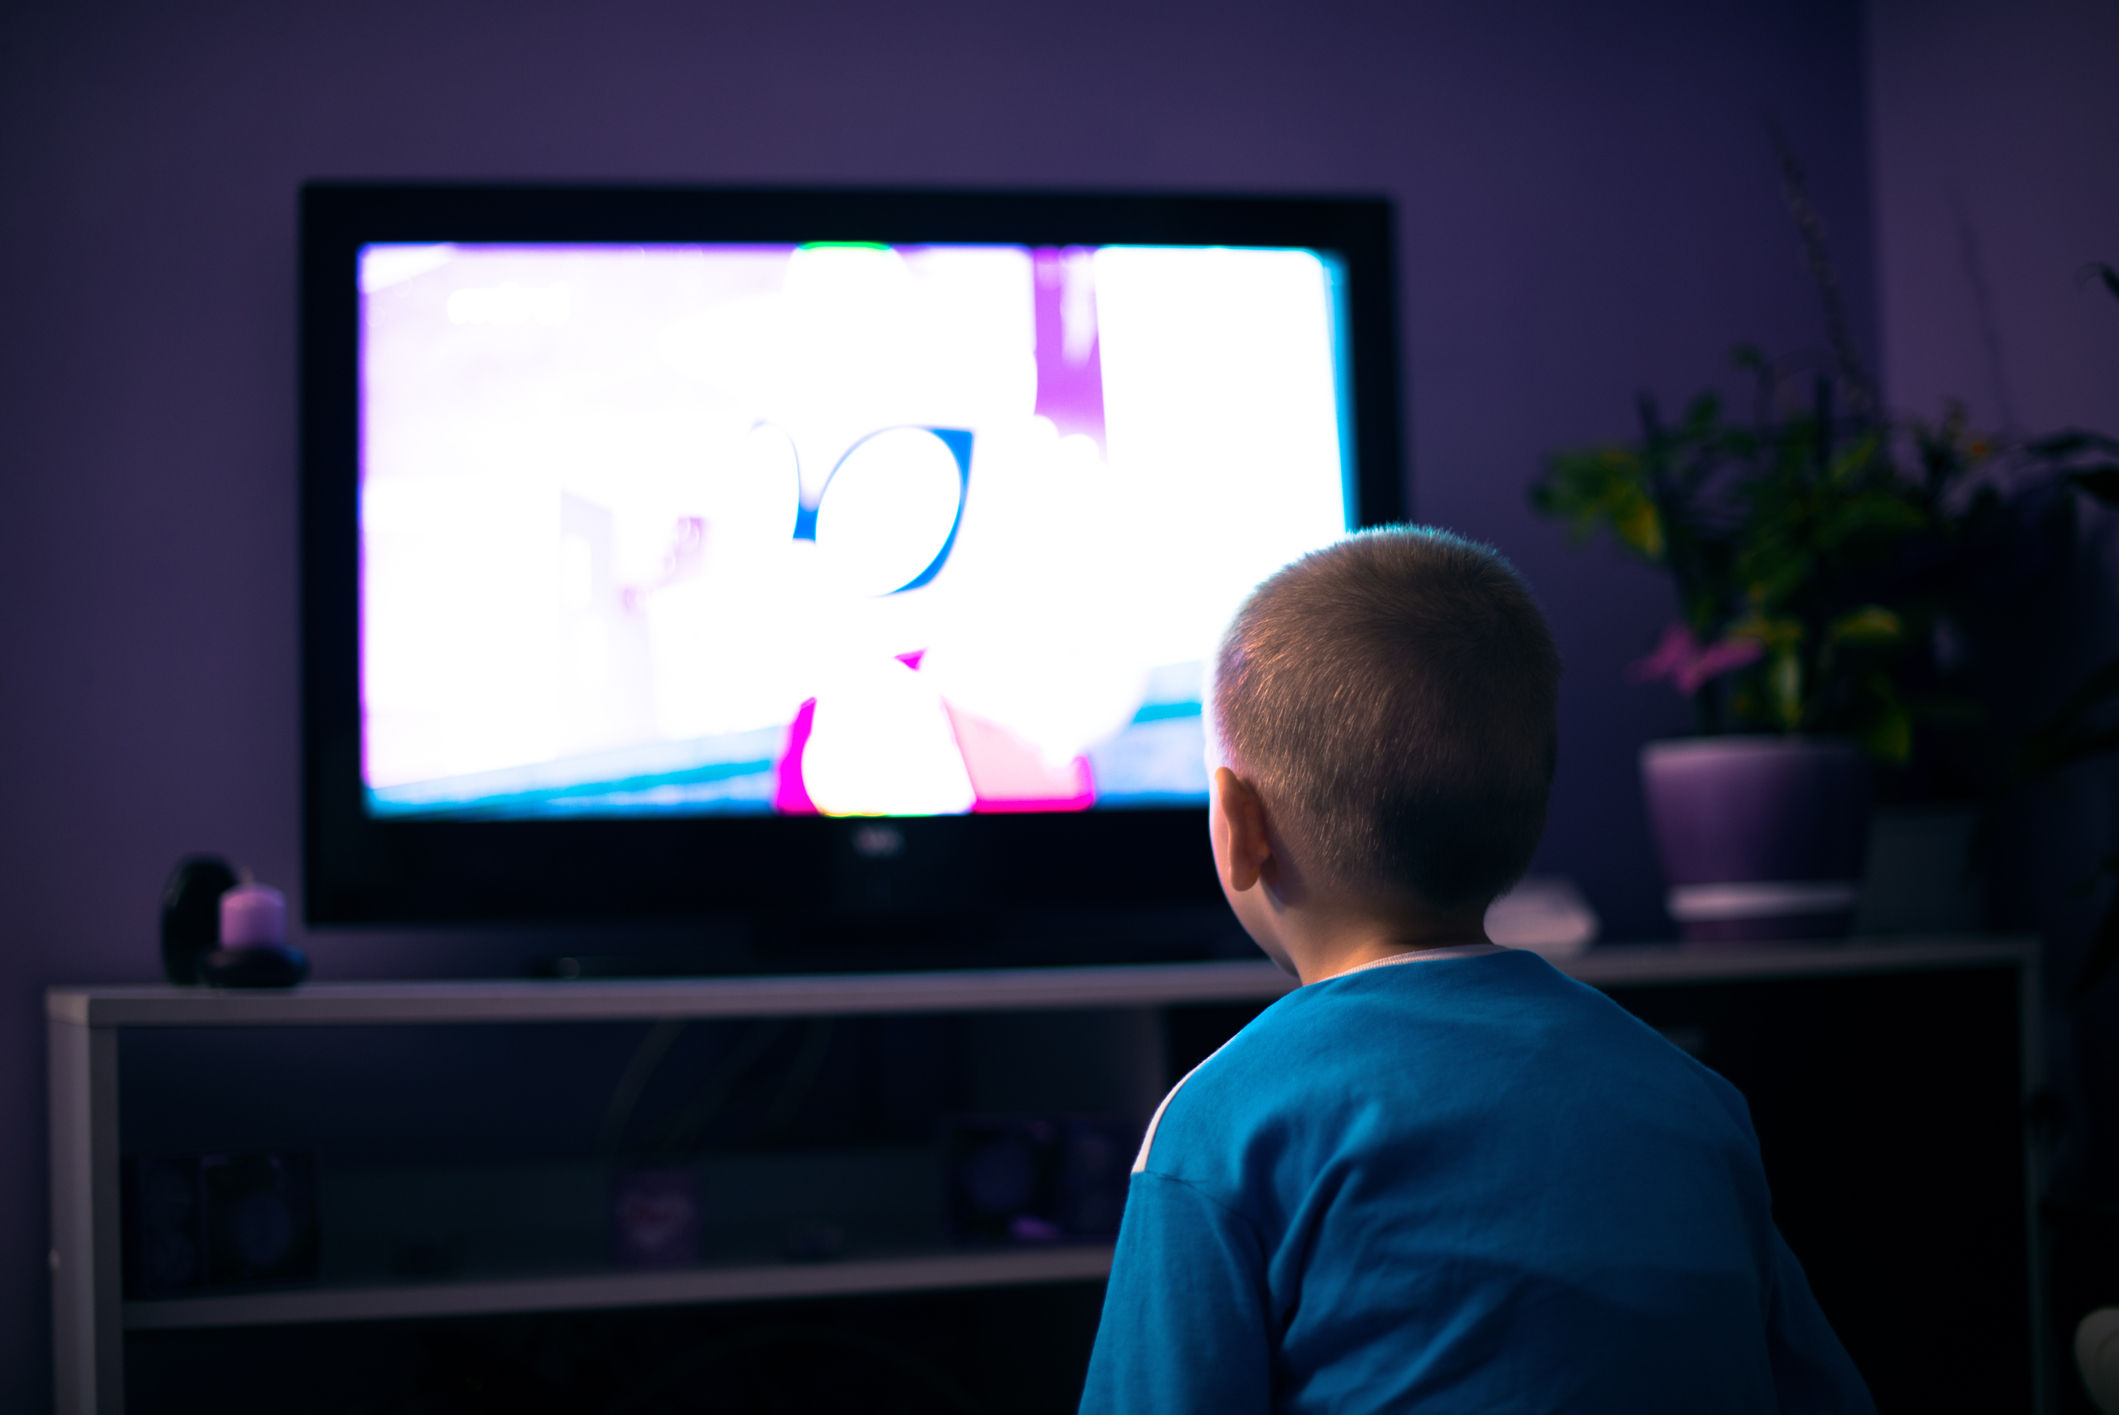 Boy watching television in dark living room